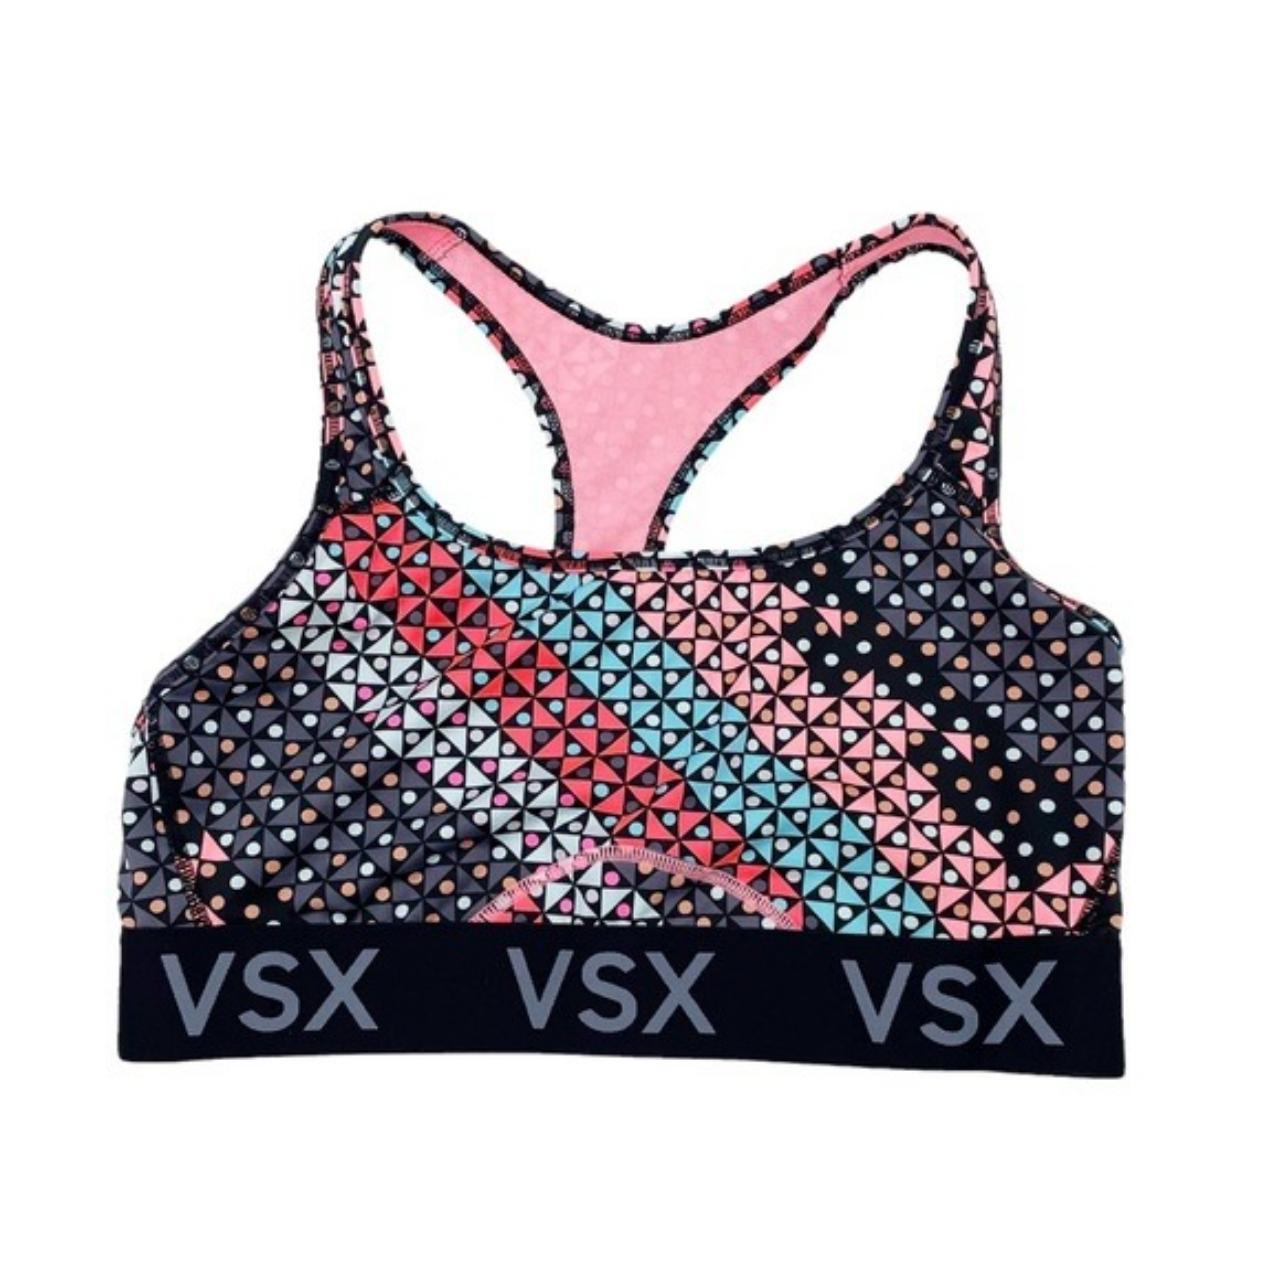 Victoria's Secret VSX Sport The Player Racerback